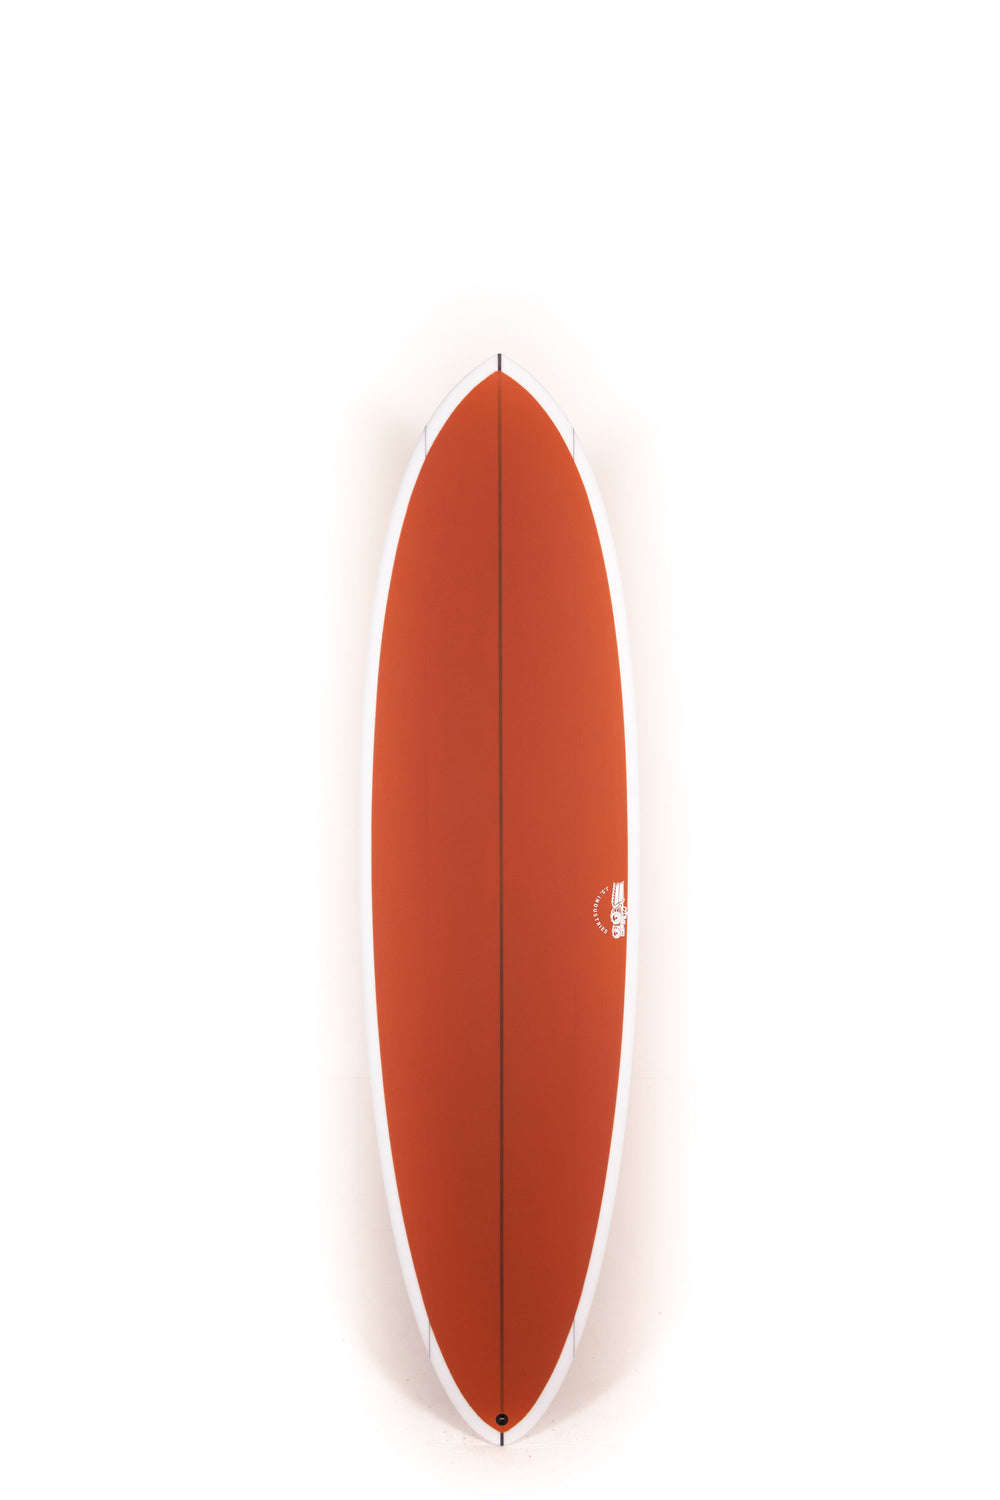 Pukas Surf Shop - JS Surfboards - BIG BARON - 7'0